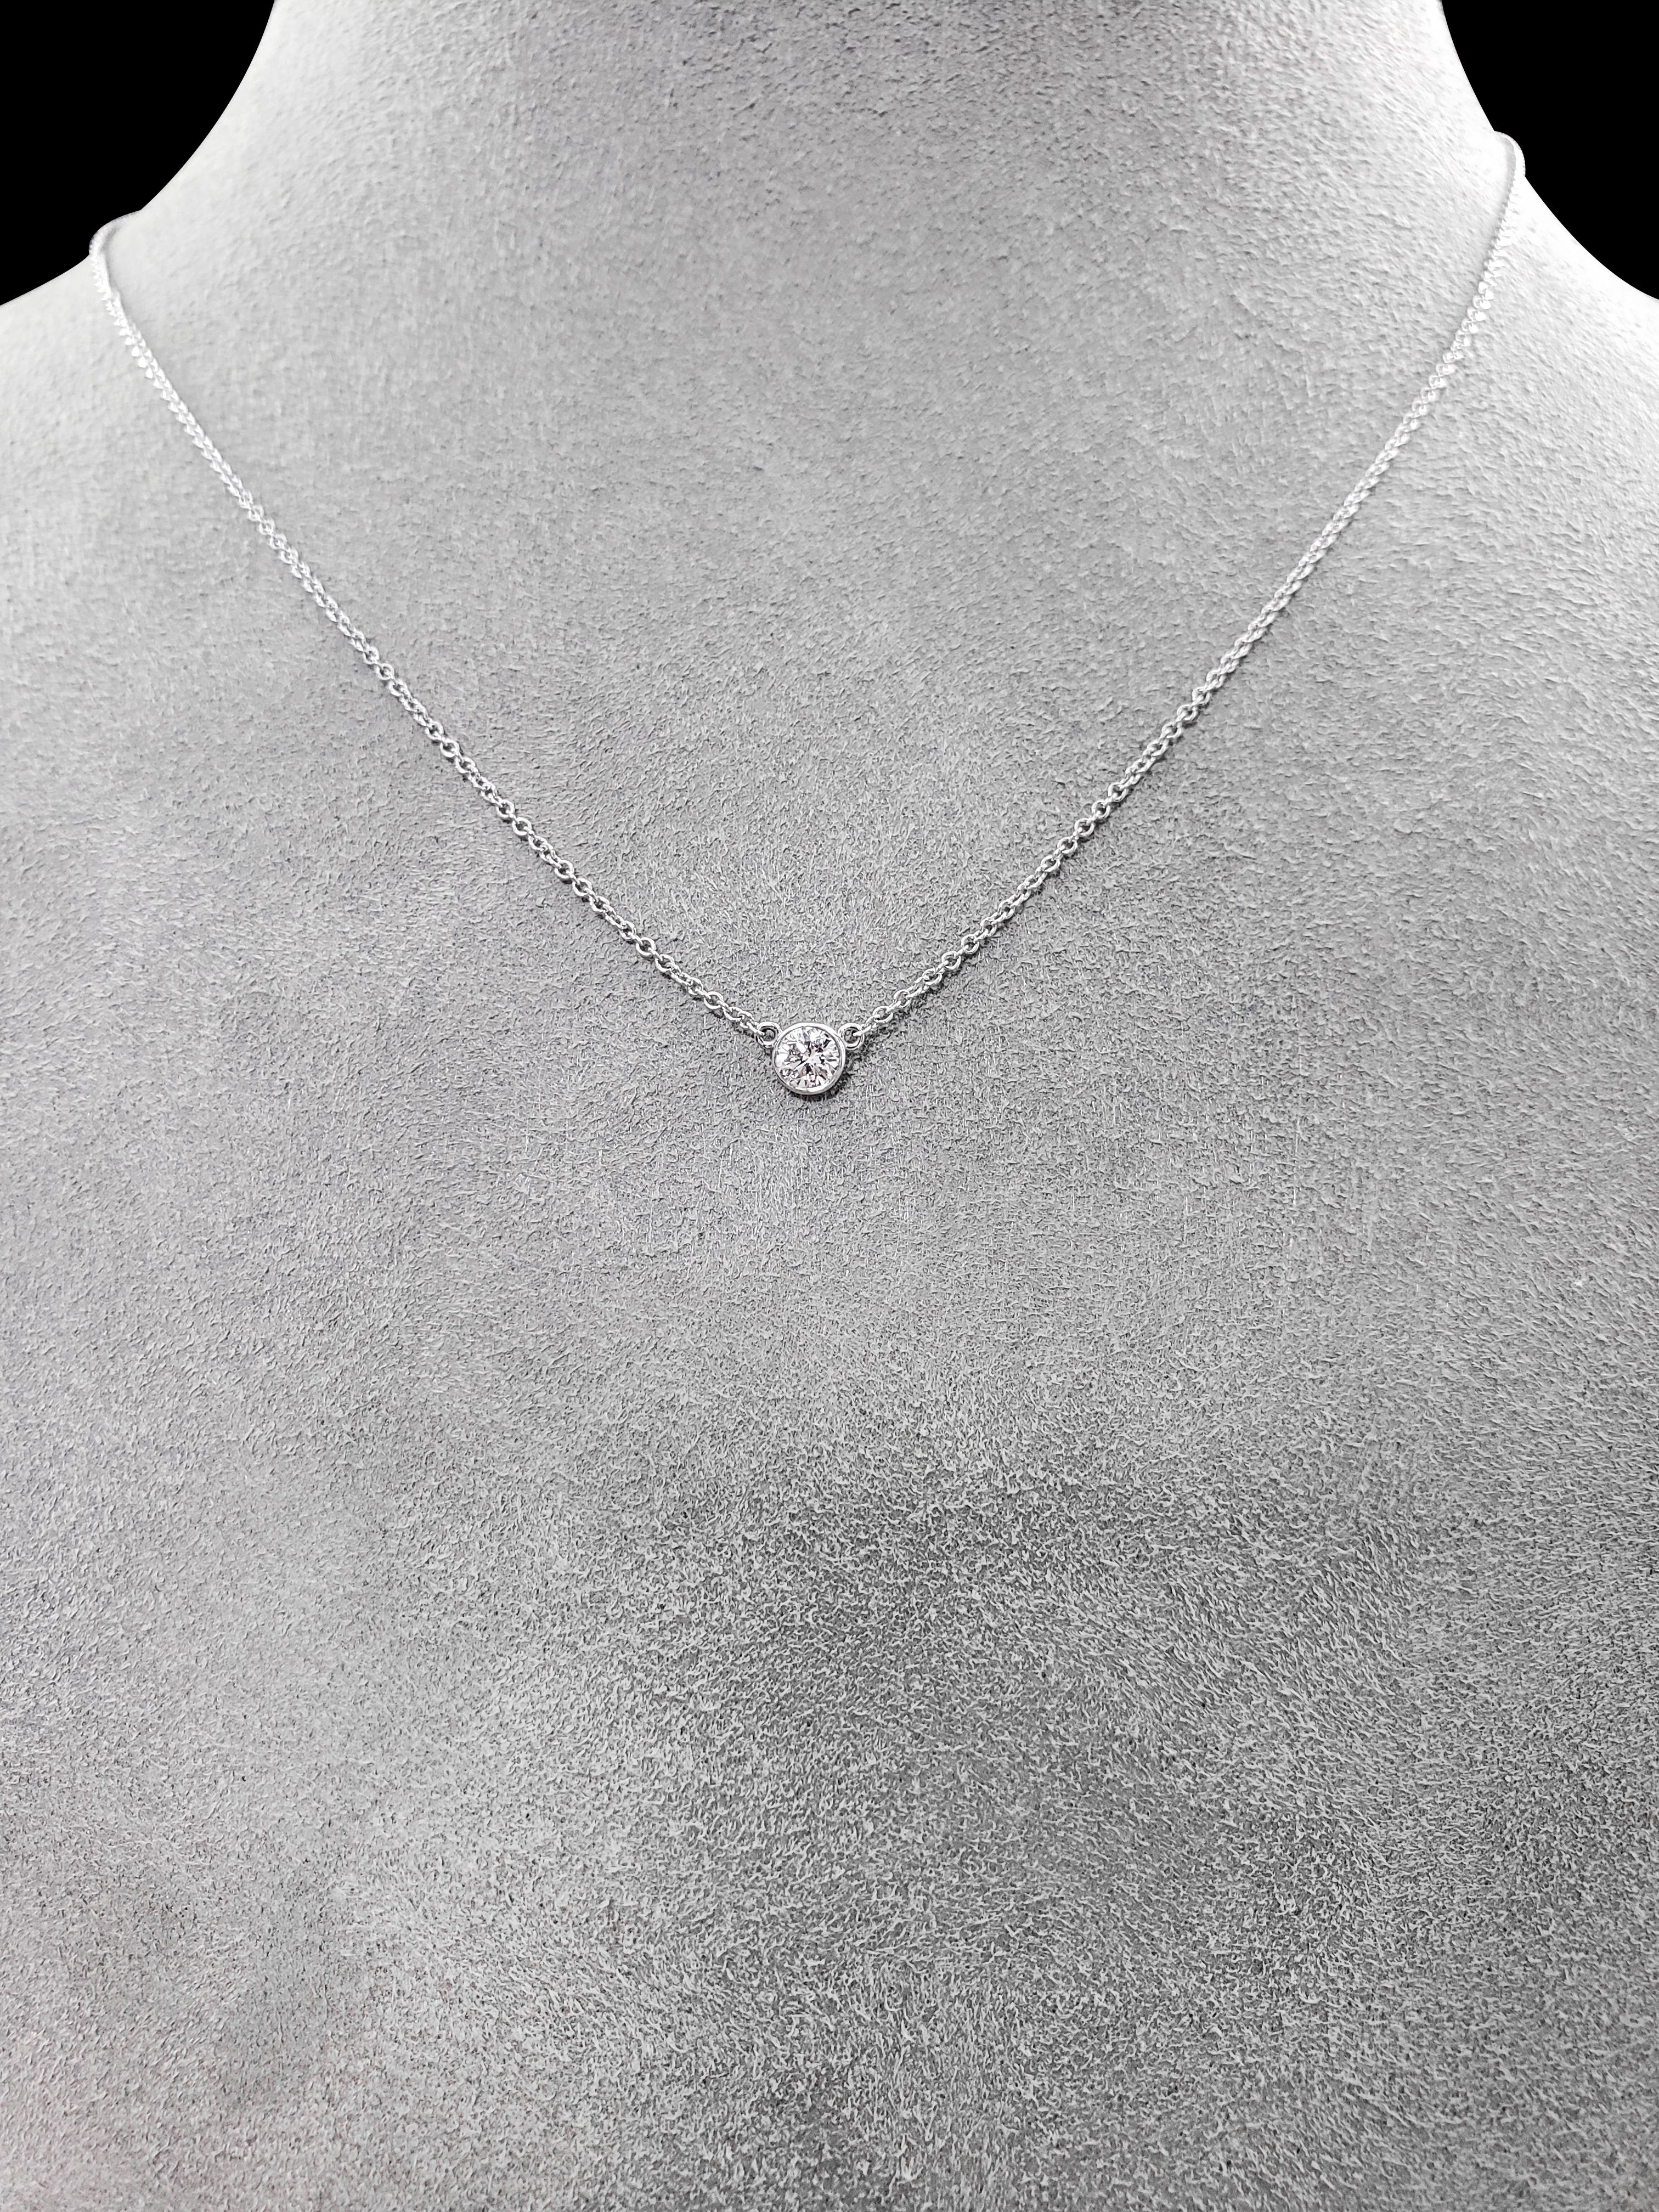 Contemporary 0.18 Carat Round Diamond Bezel Solitaire Pendant Necklace